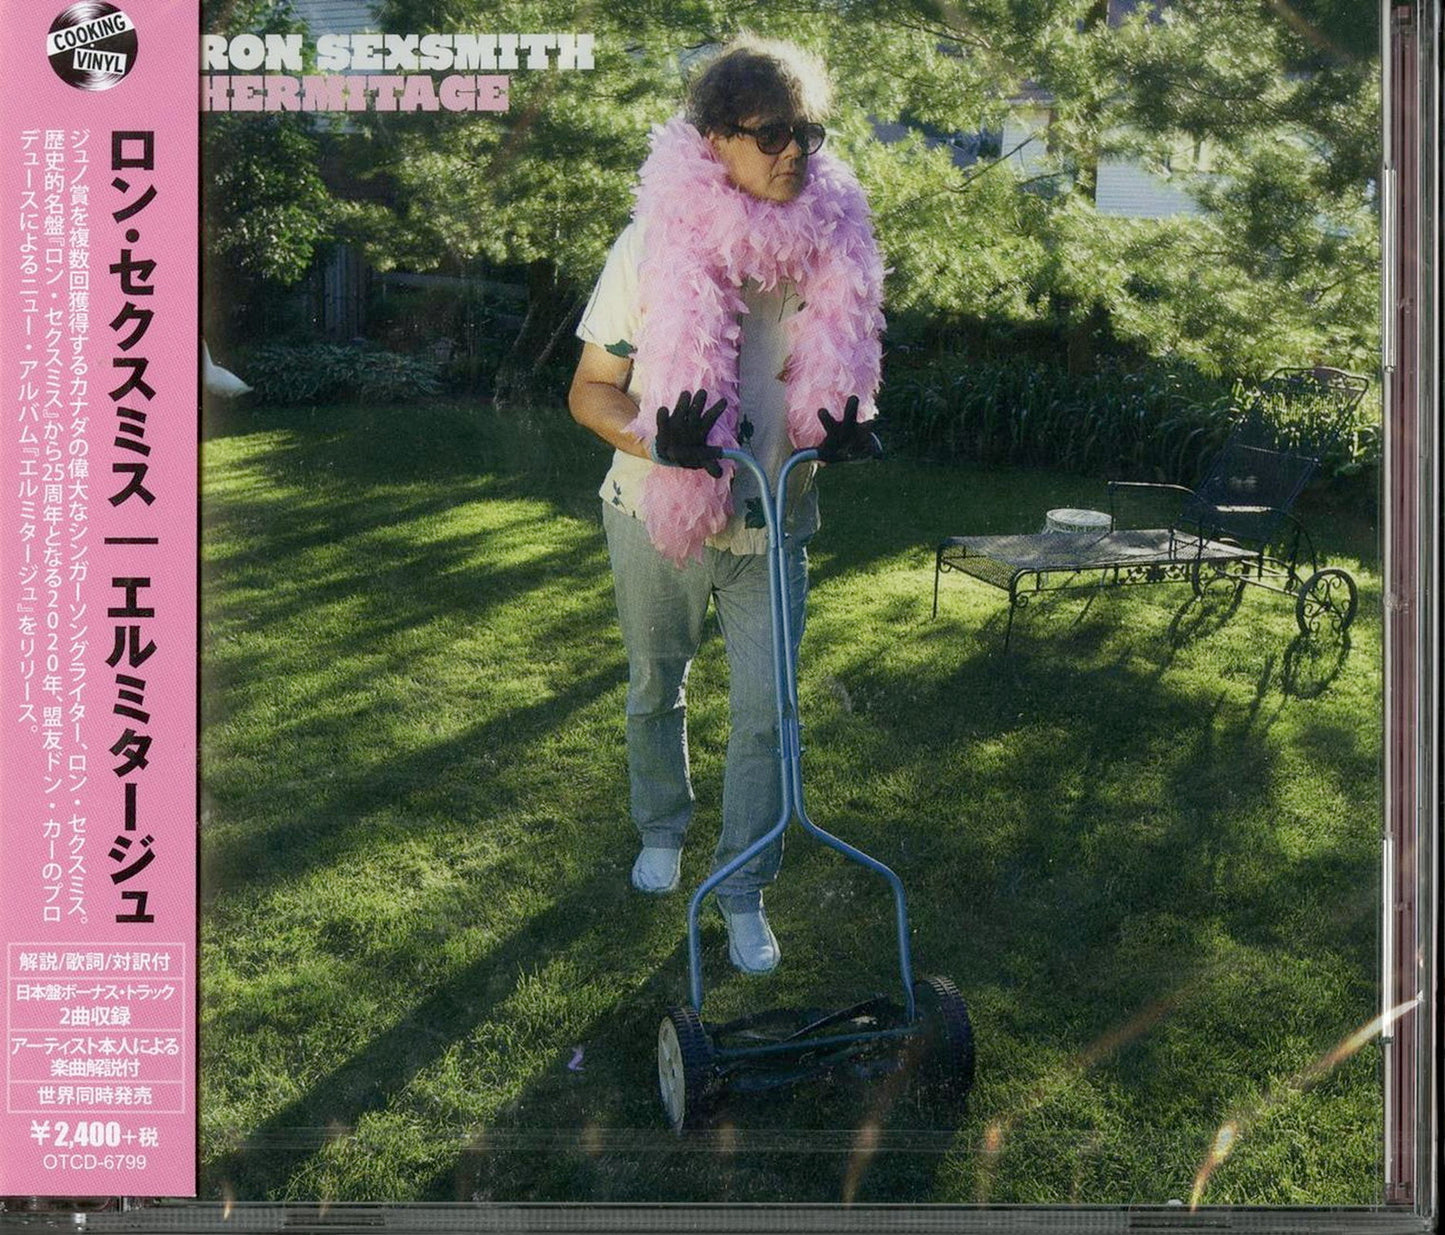 Ron Sexsmith - Hermitage - Japan  CD Bonus Track